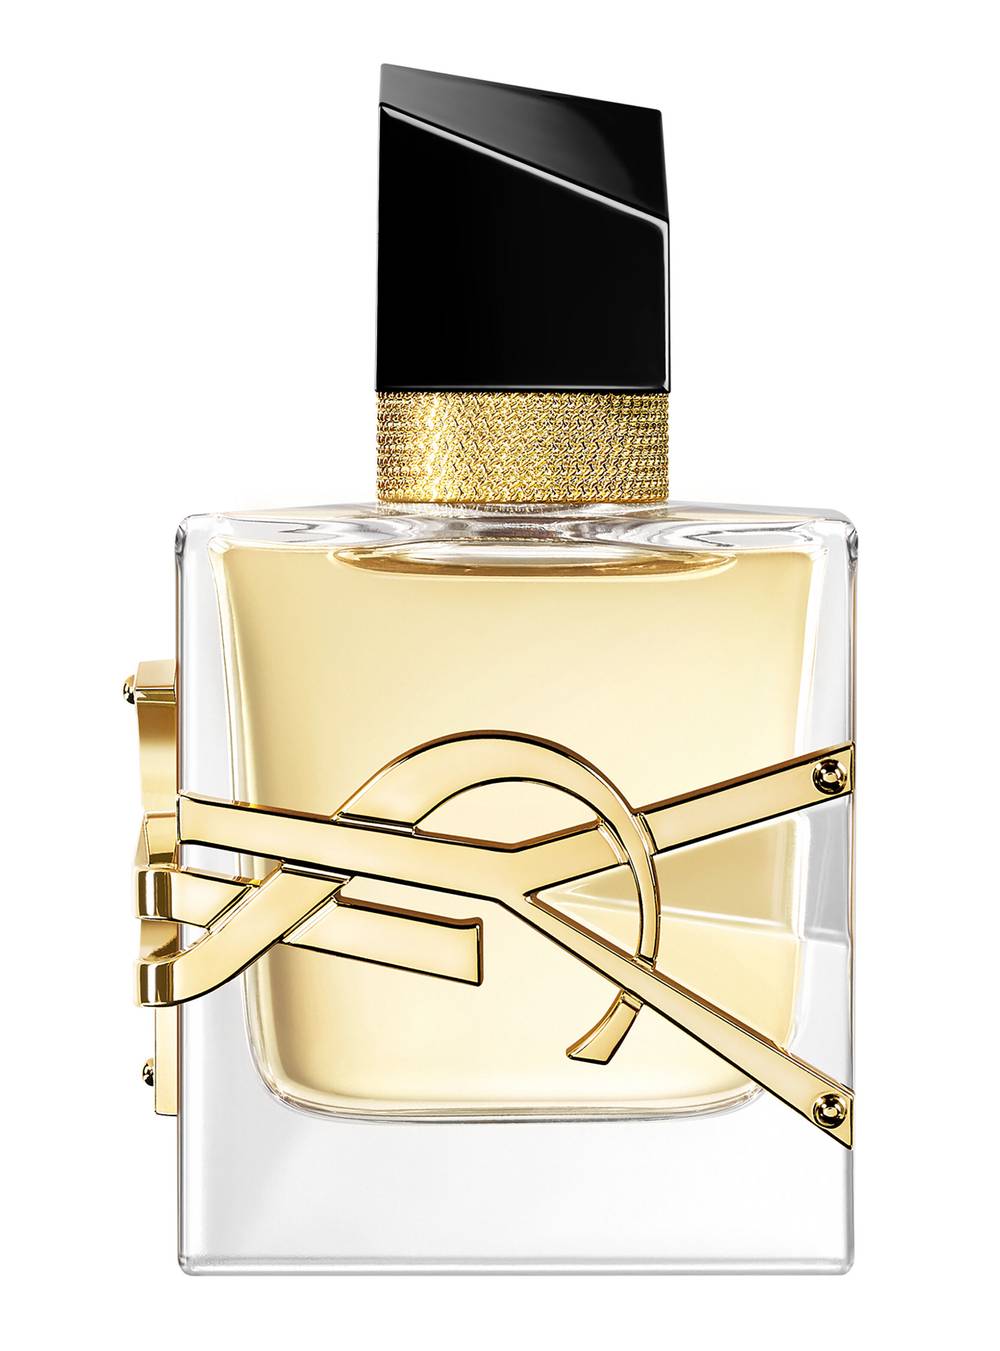 Yves saint laurent perfume libre intense edp (botella 30 ml)